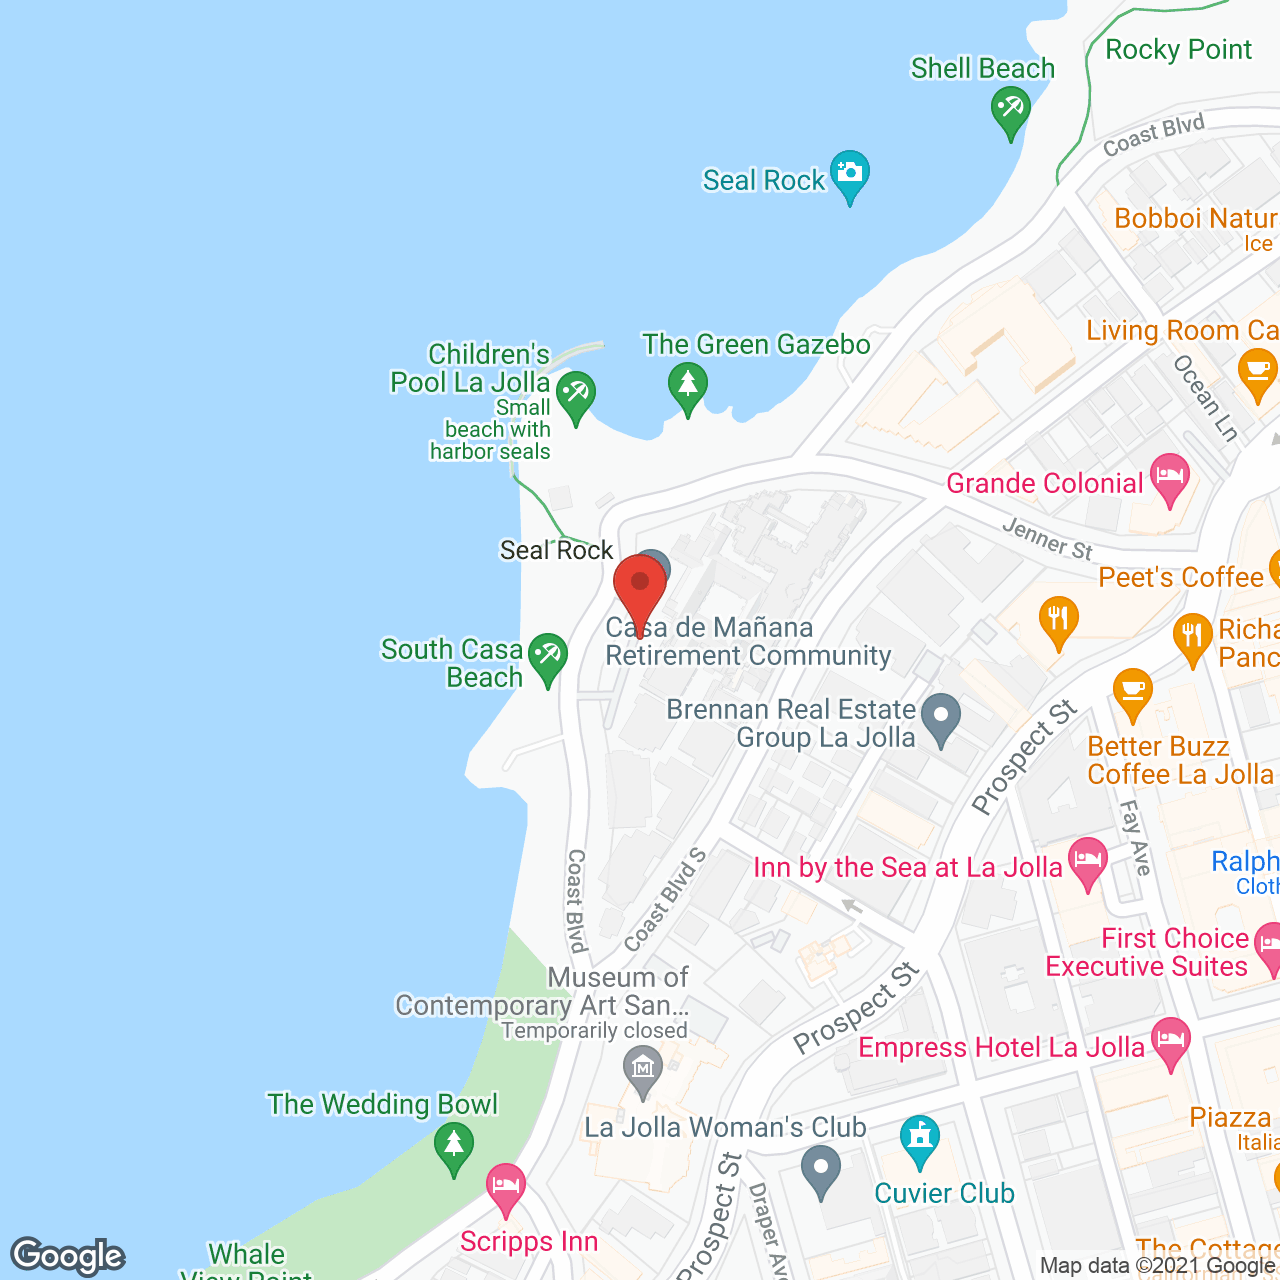 Casa De Manana in google map